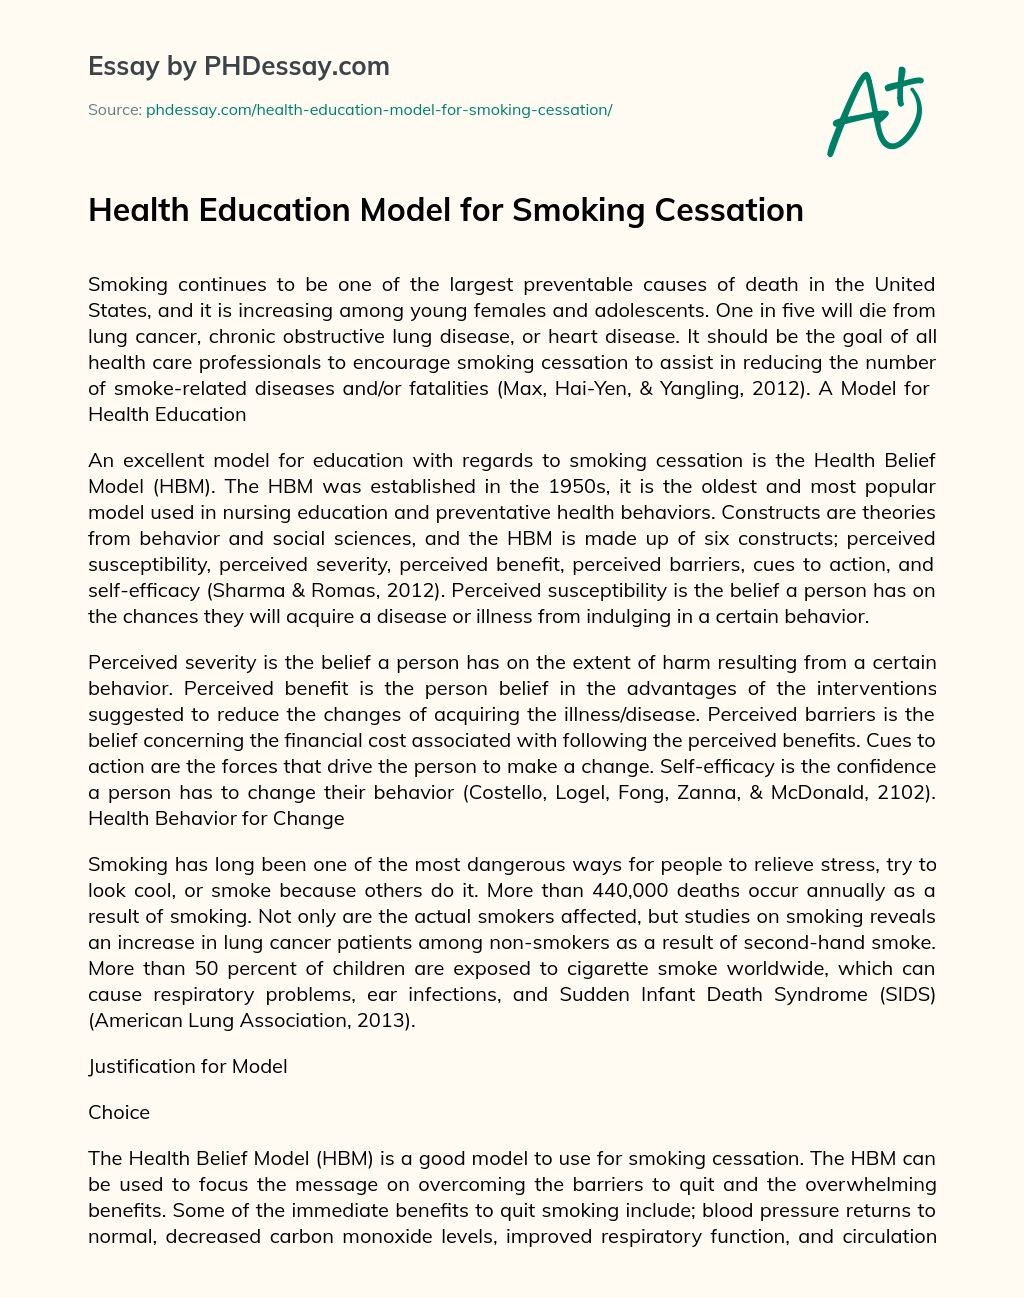 health education essay